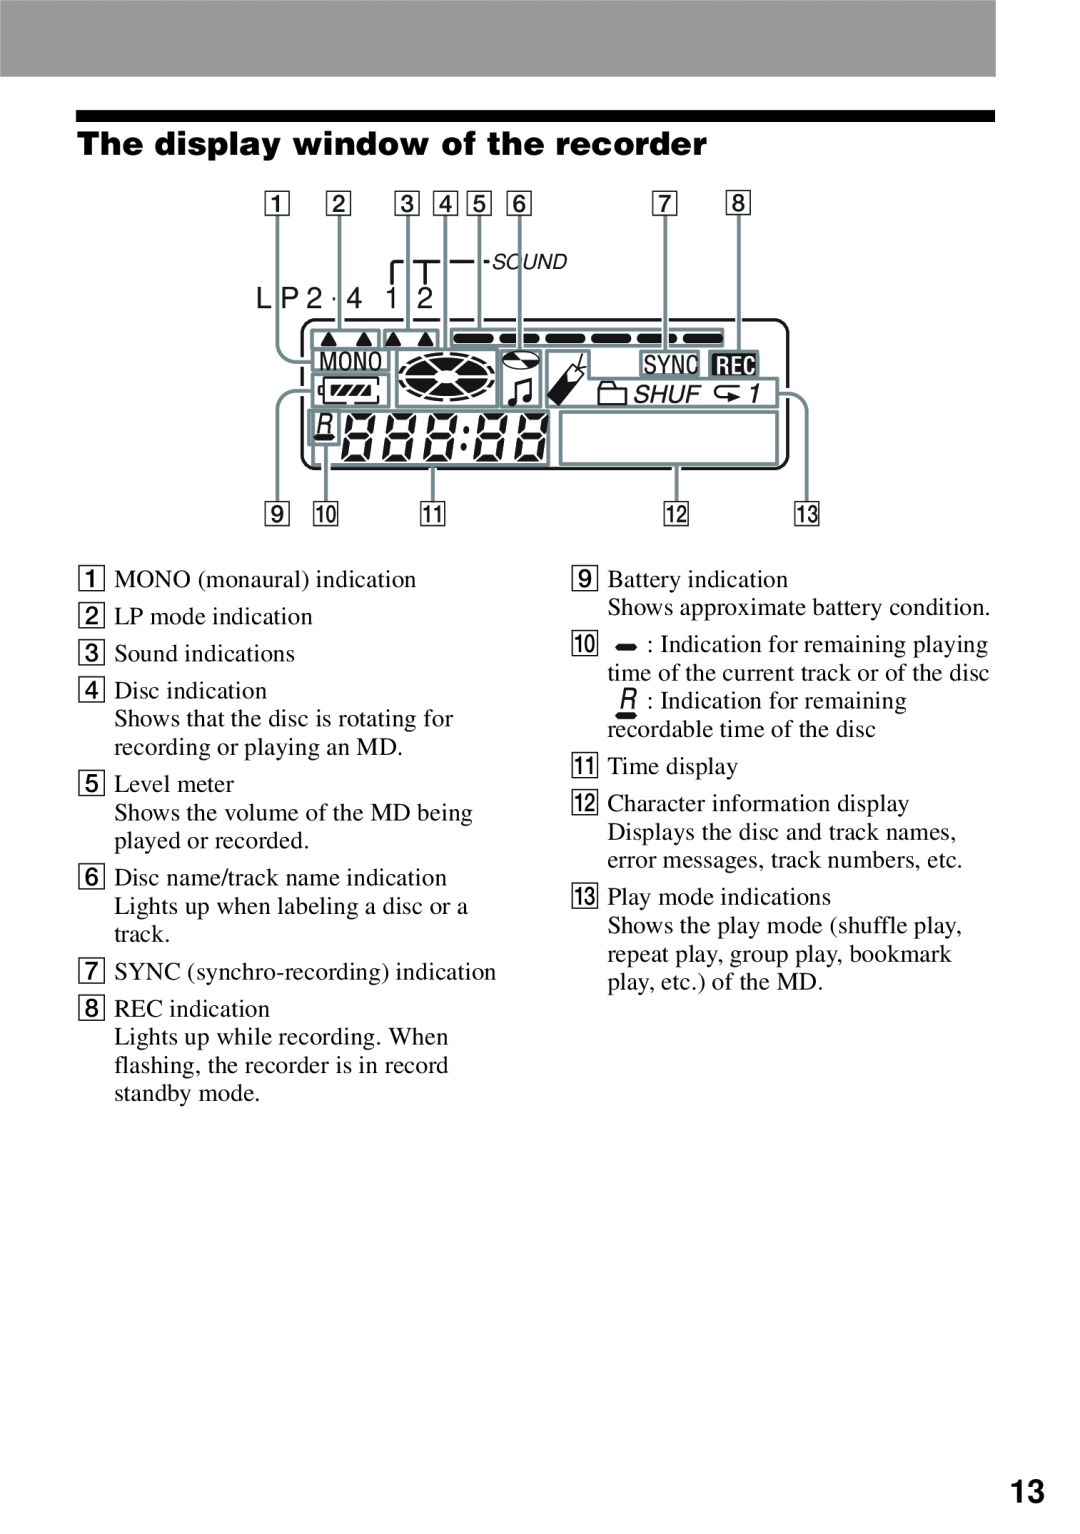 Sony MZ-N510 operating instructions The display window of the recorder, L P 2 . 4 1, 3 4 5, 9 q; qa, qs qd 